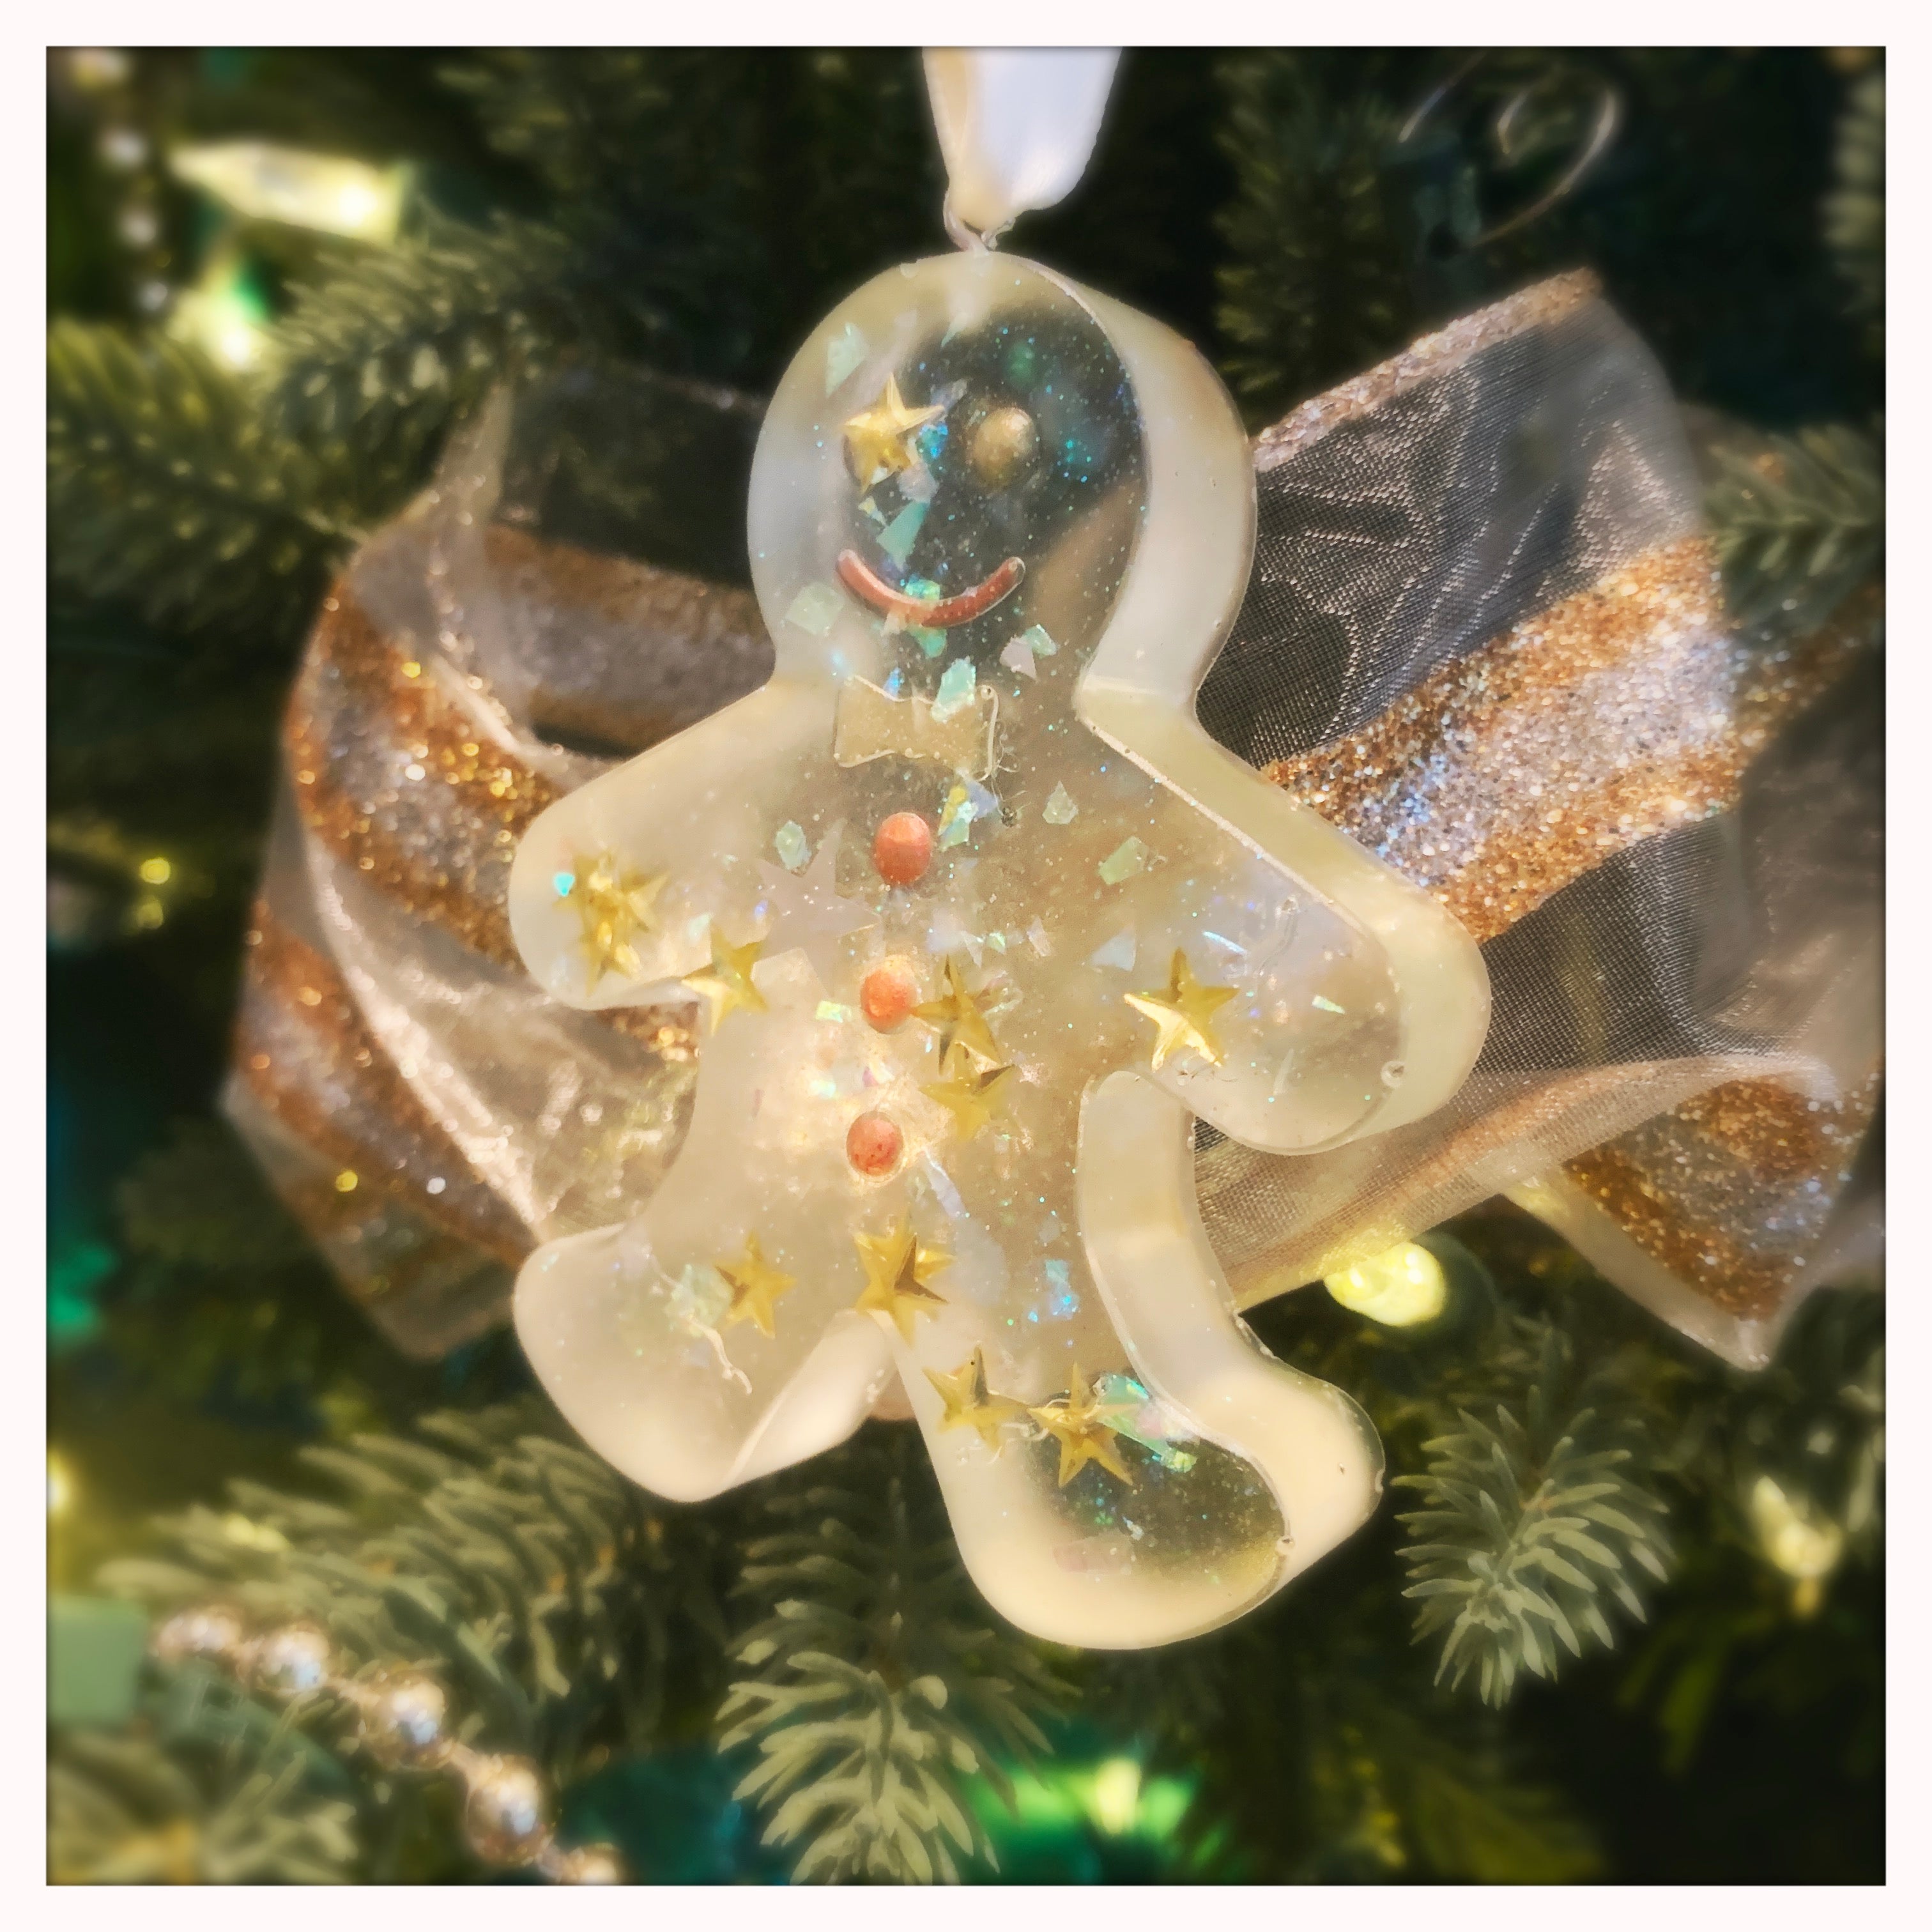 Gingerbread Tree Ornament